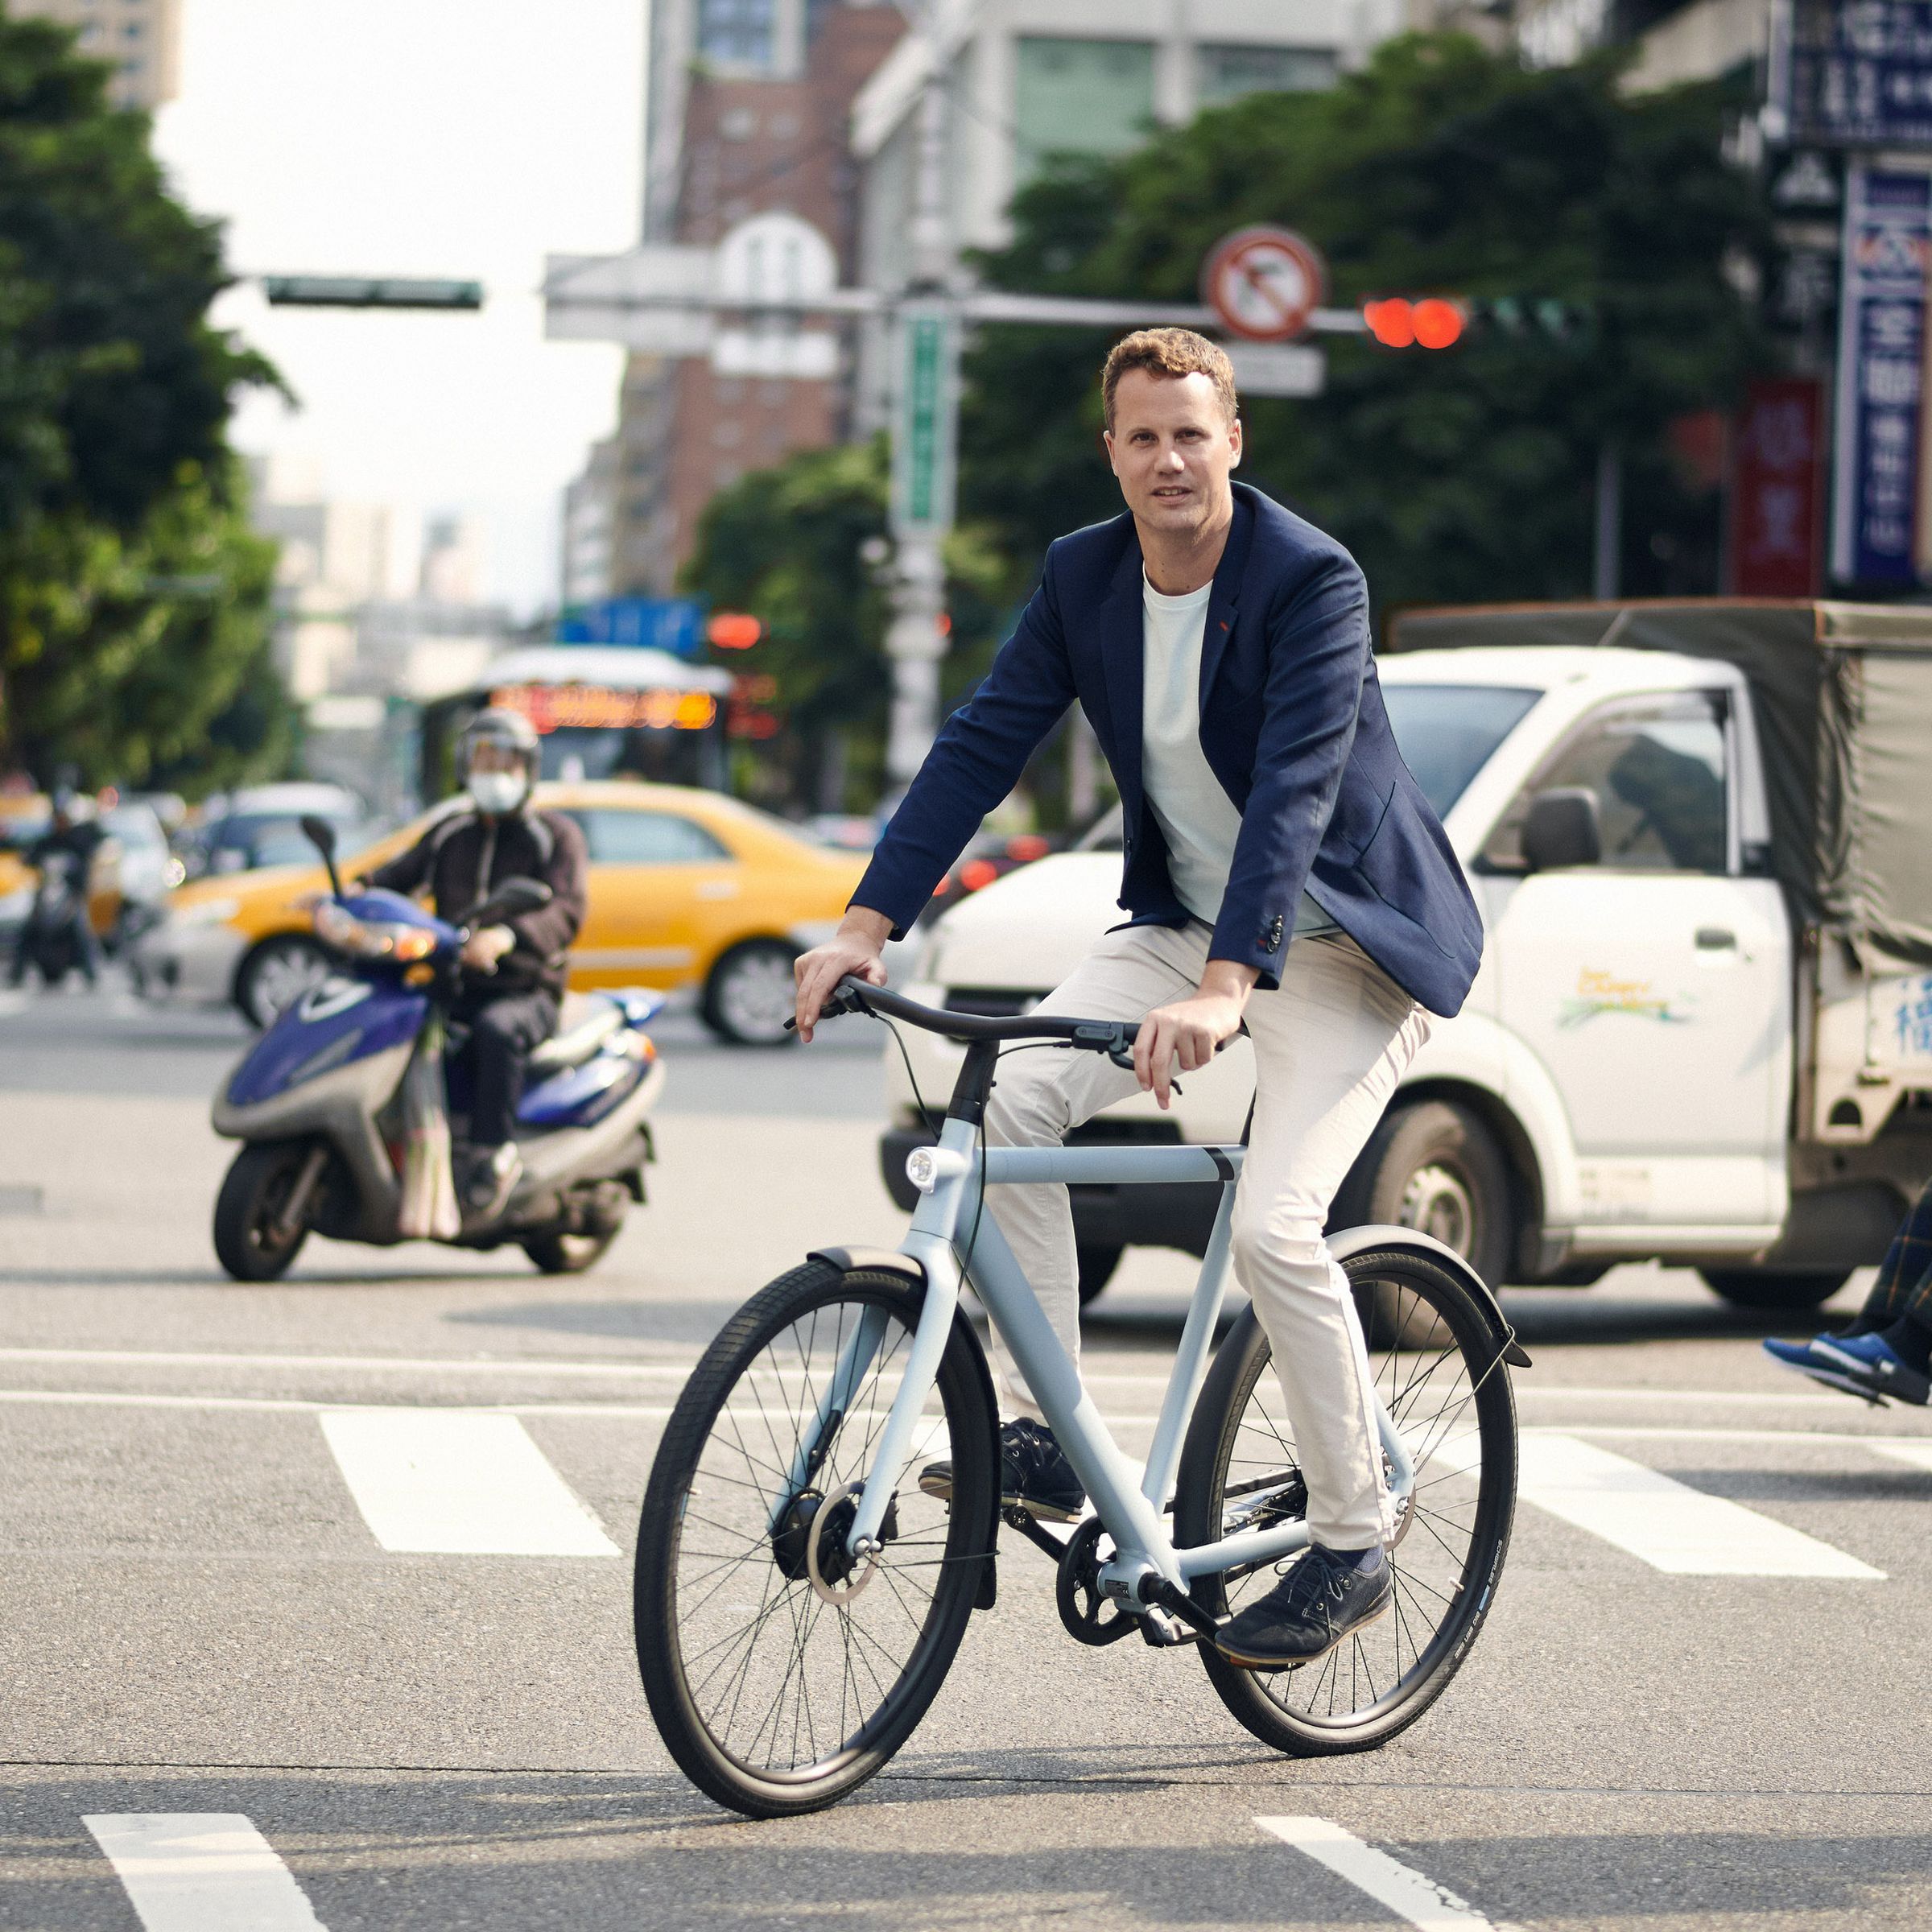 VanMoof co-founder Ties Carlier on an S3 electric bike.